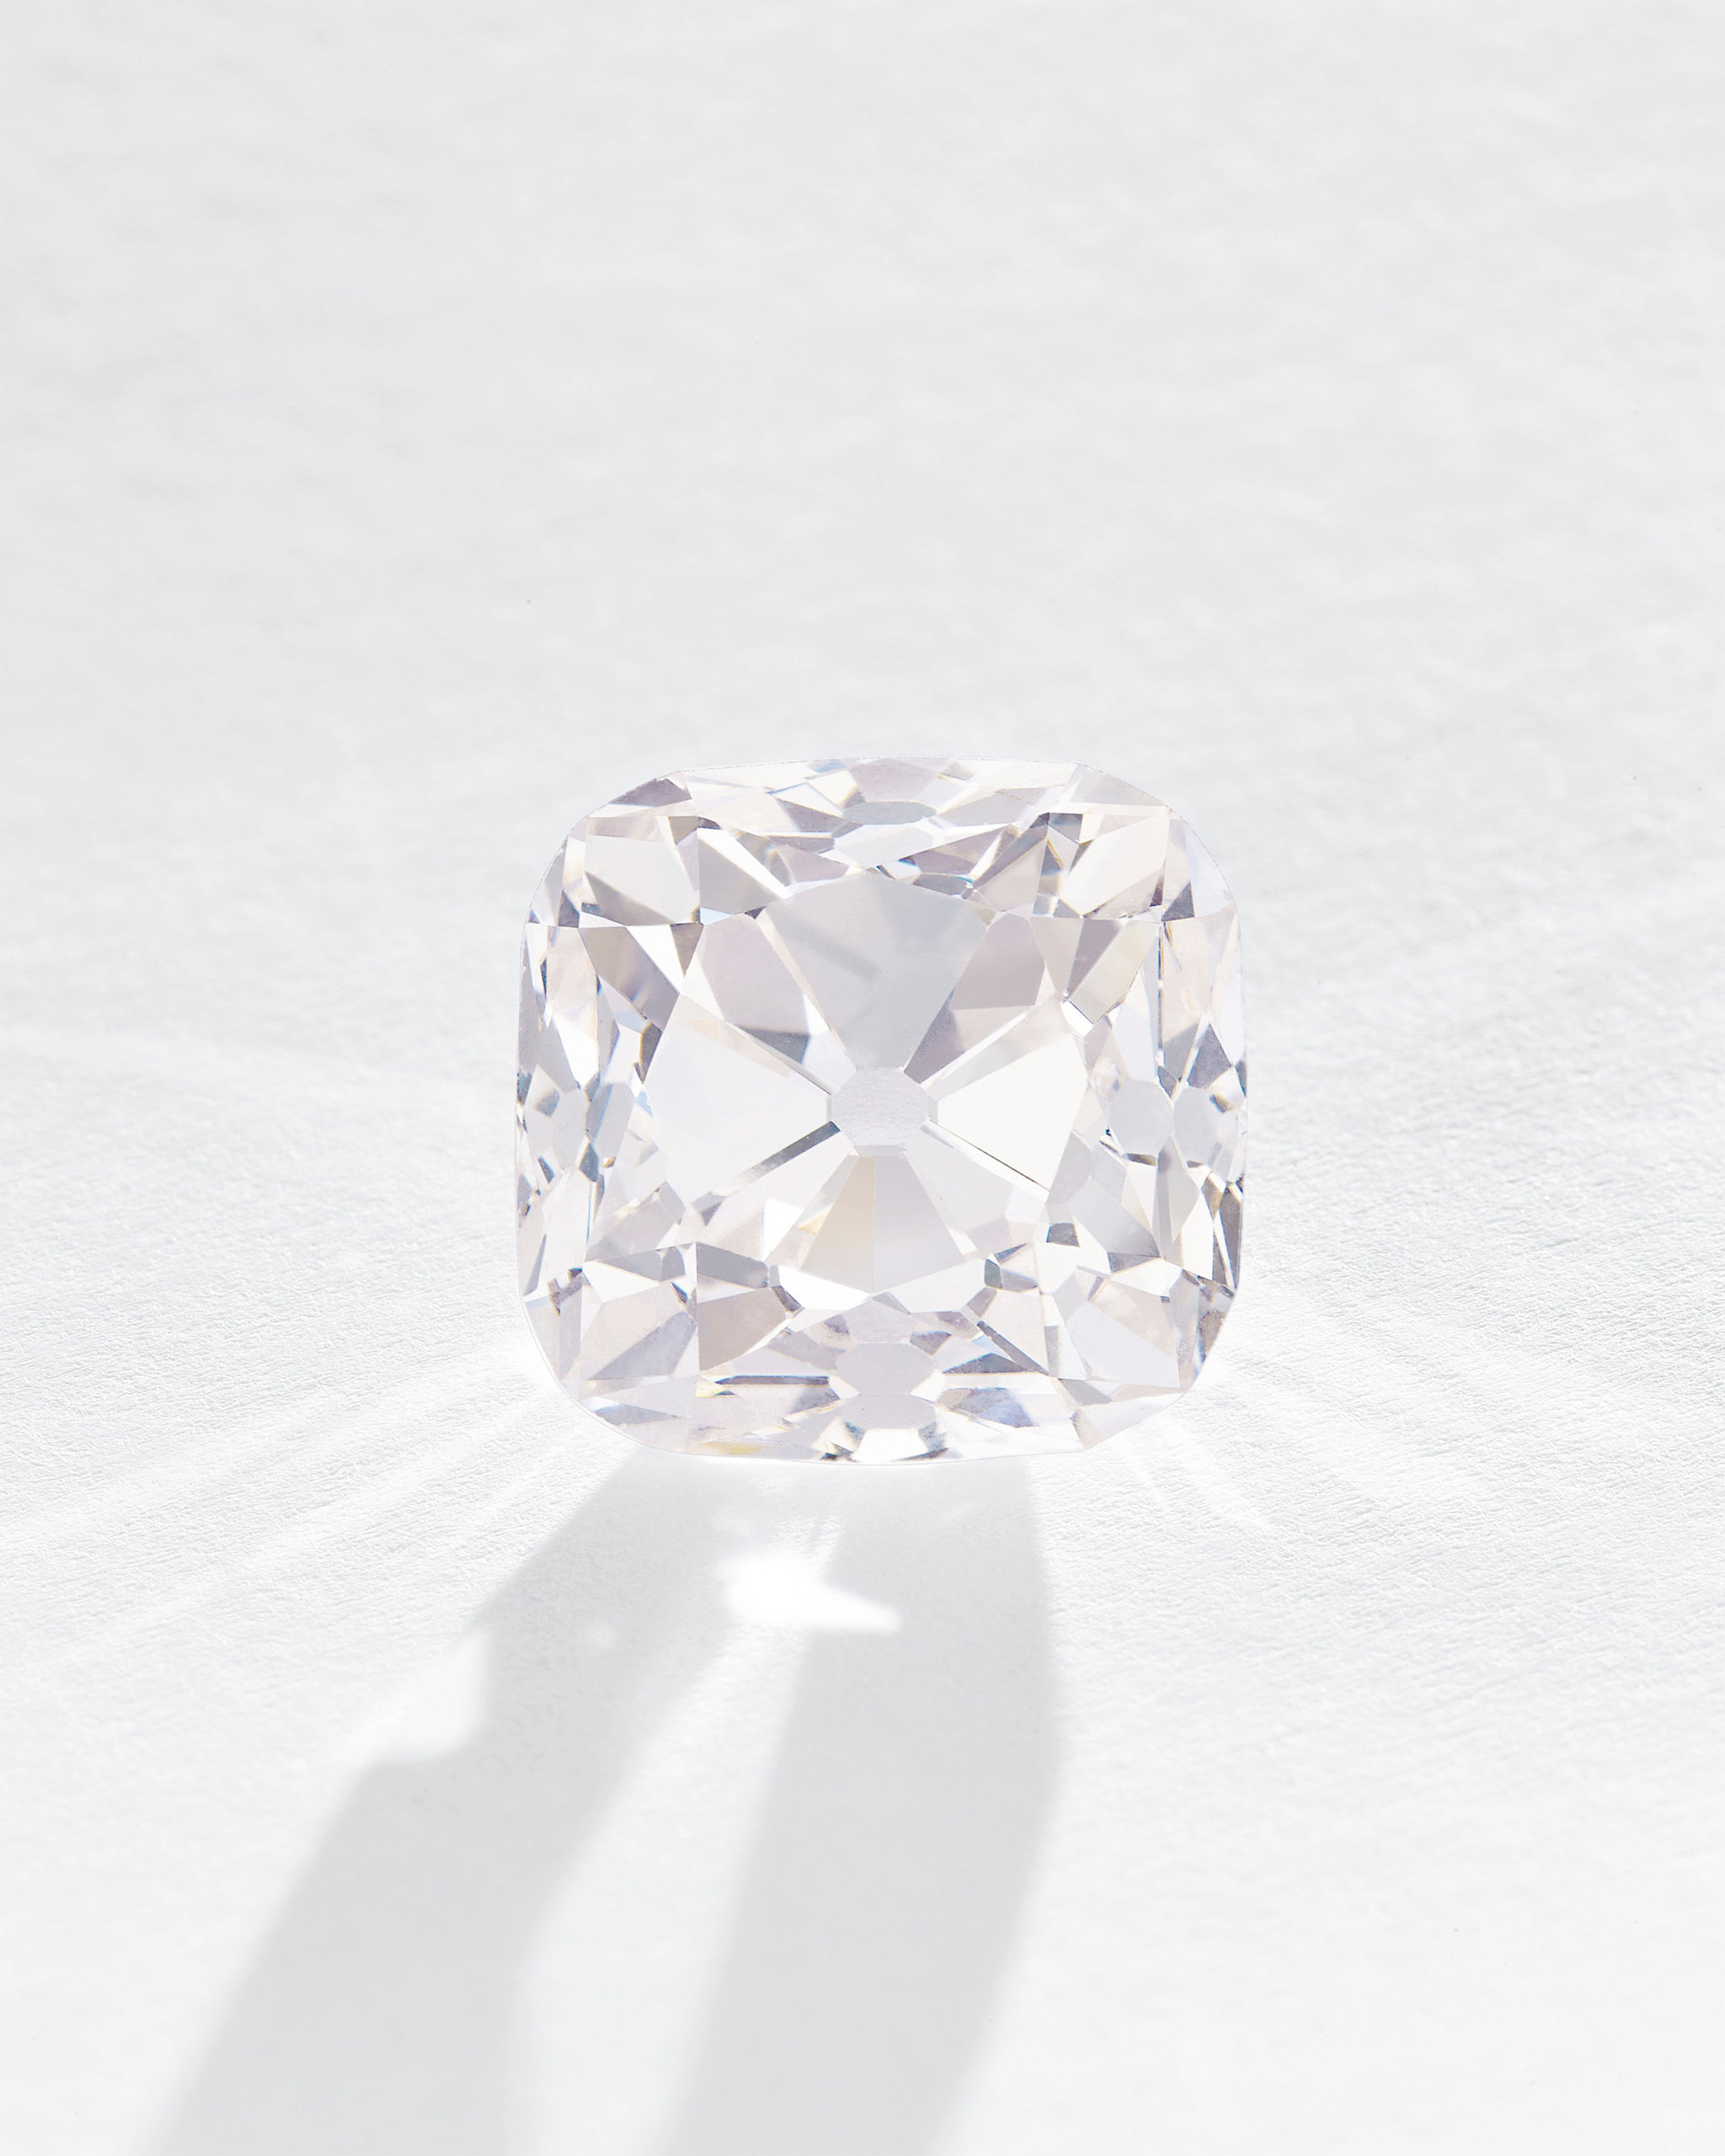 Cardinal Mazarin's Le Grand Mazarin diamond sold at the 2017 Christie's Magnificent Jewels auction in Geneva